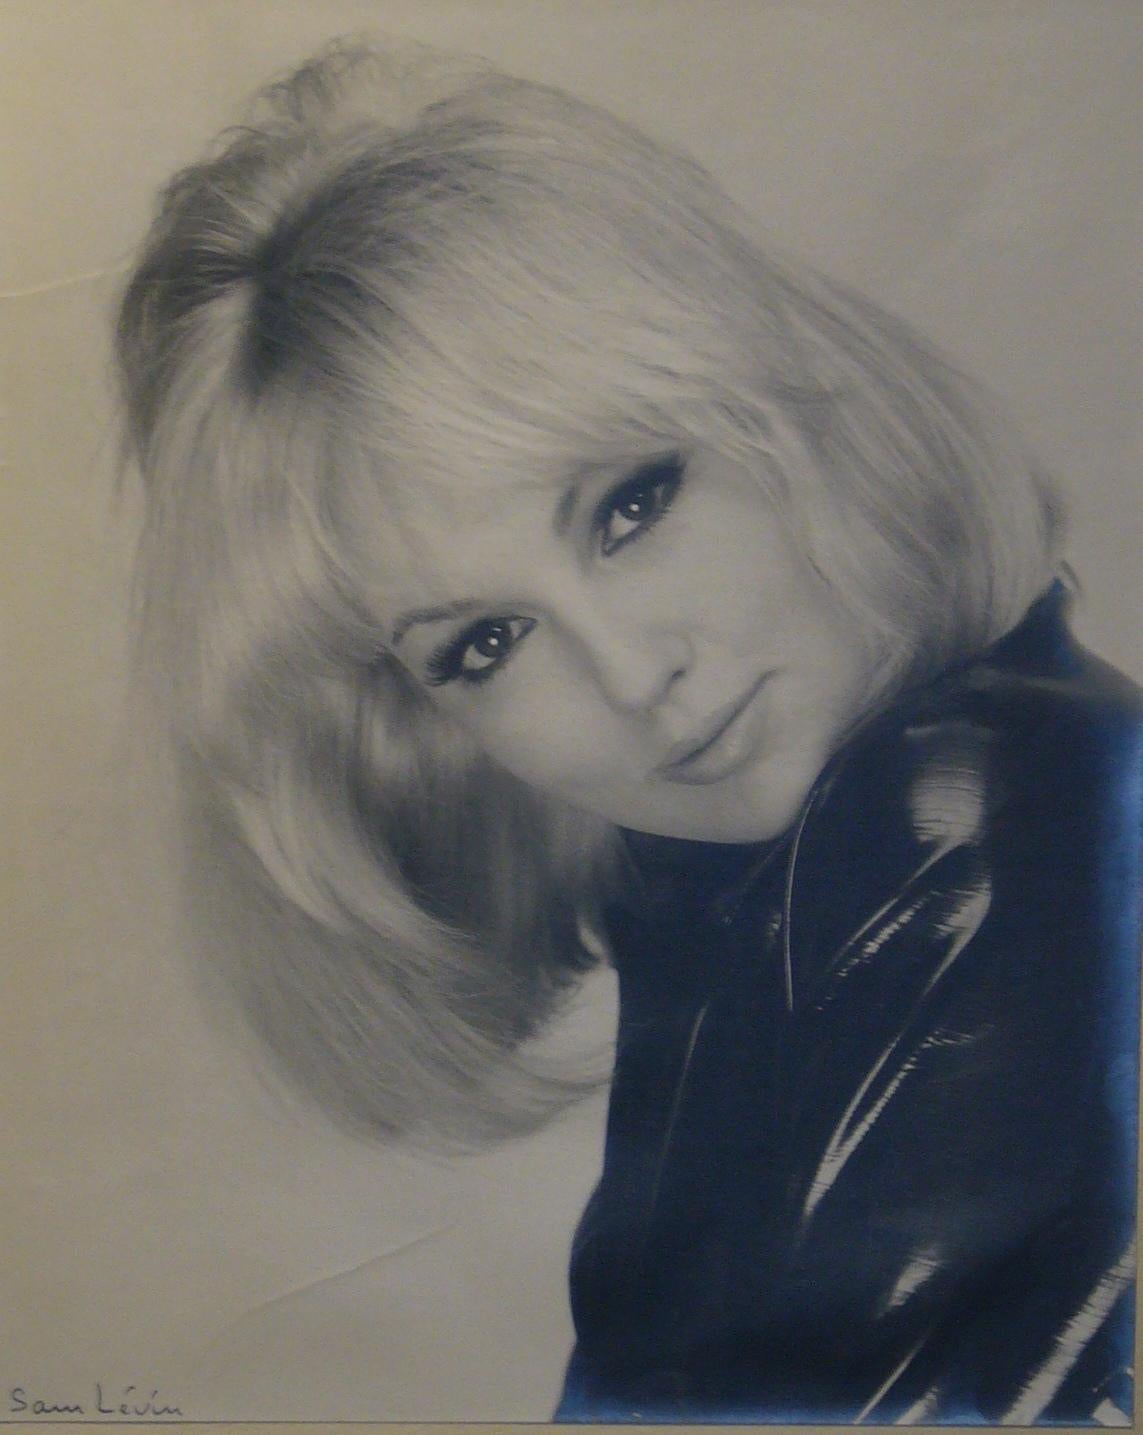 Portrait Print Sam Levin - Mylene Demongeot - photographie signée, 50x40 cm.